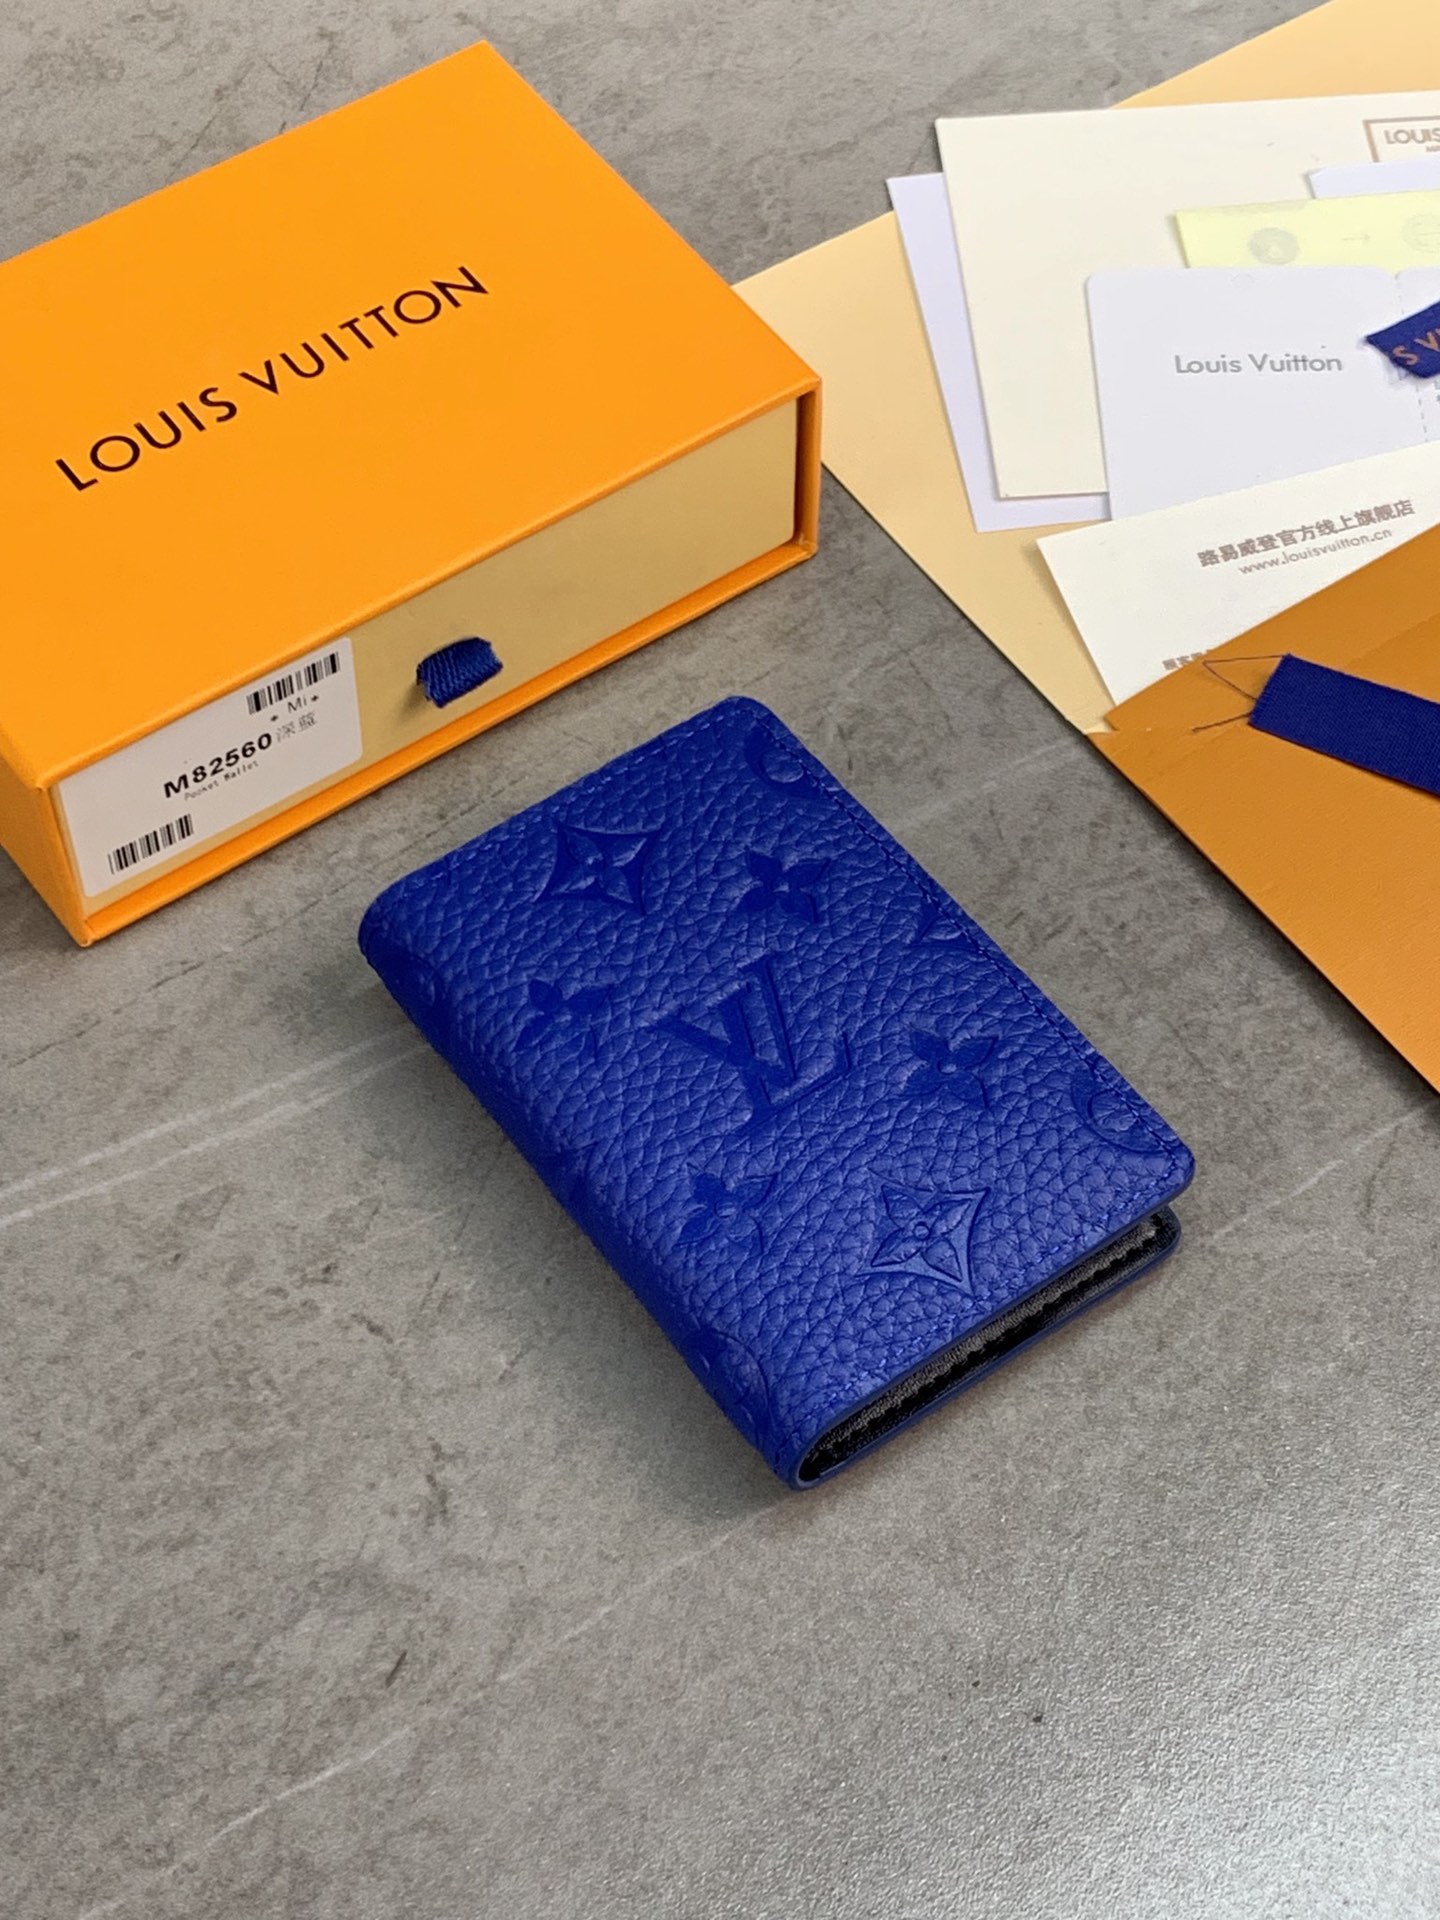 First Top
 Louis Vuitton Wallet Blue Dark Taurillon M82560